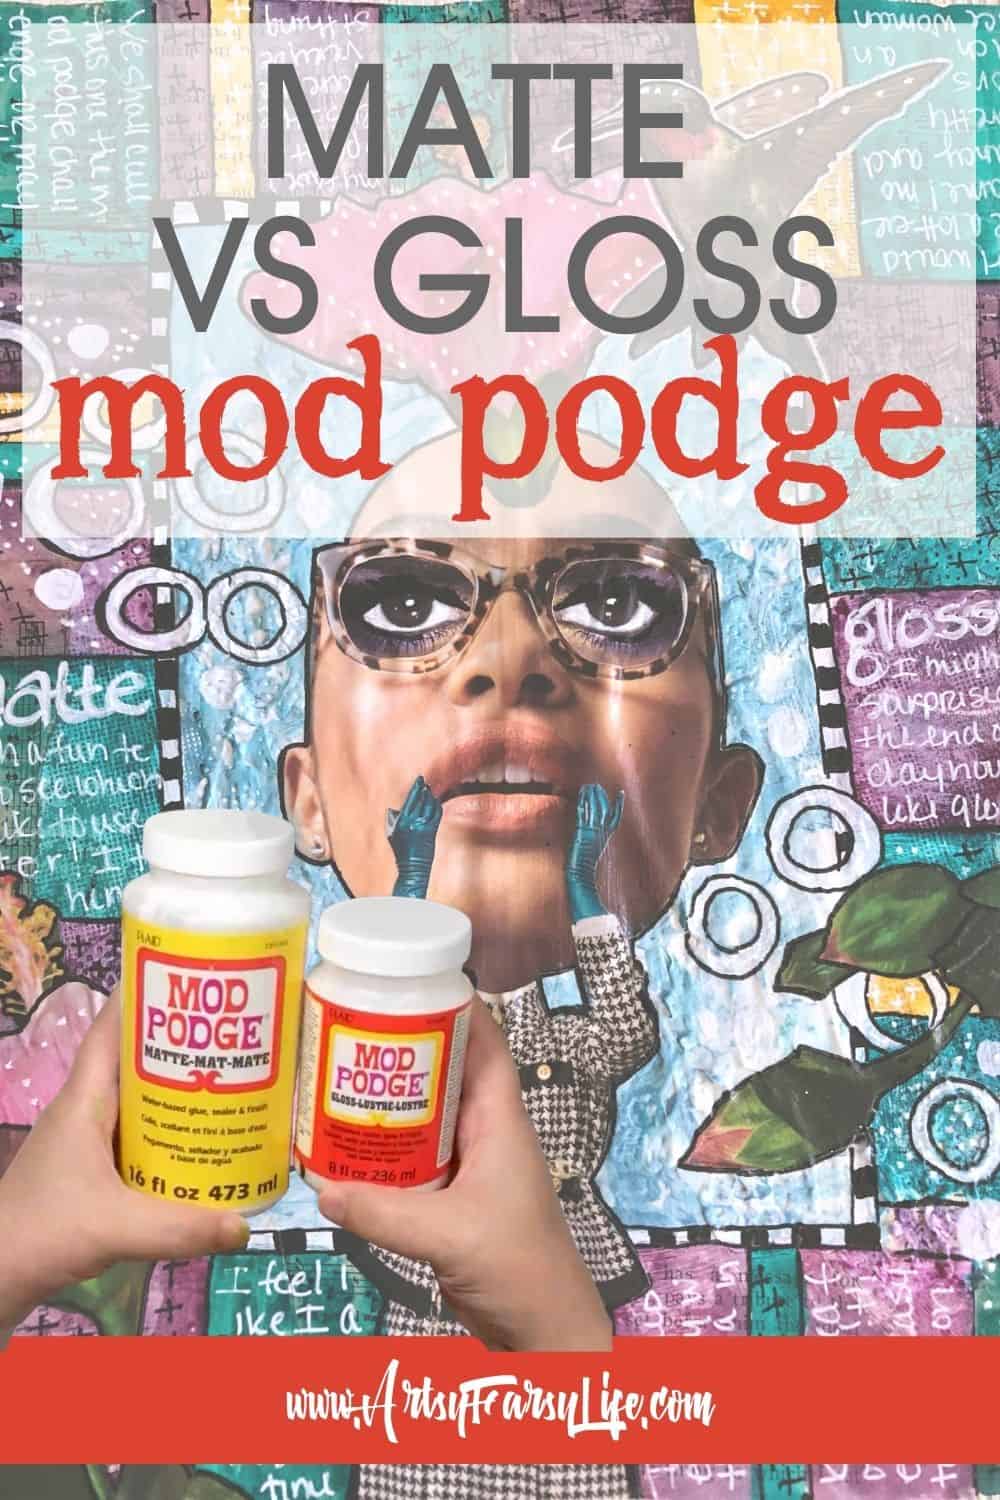 Mod Podge Matte vs Gloss - Home Education Magazine